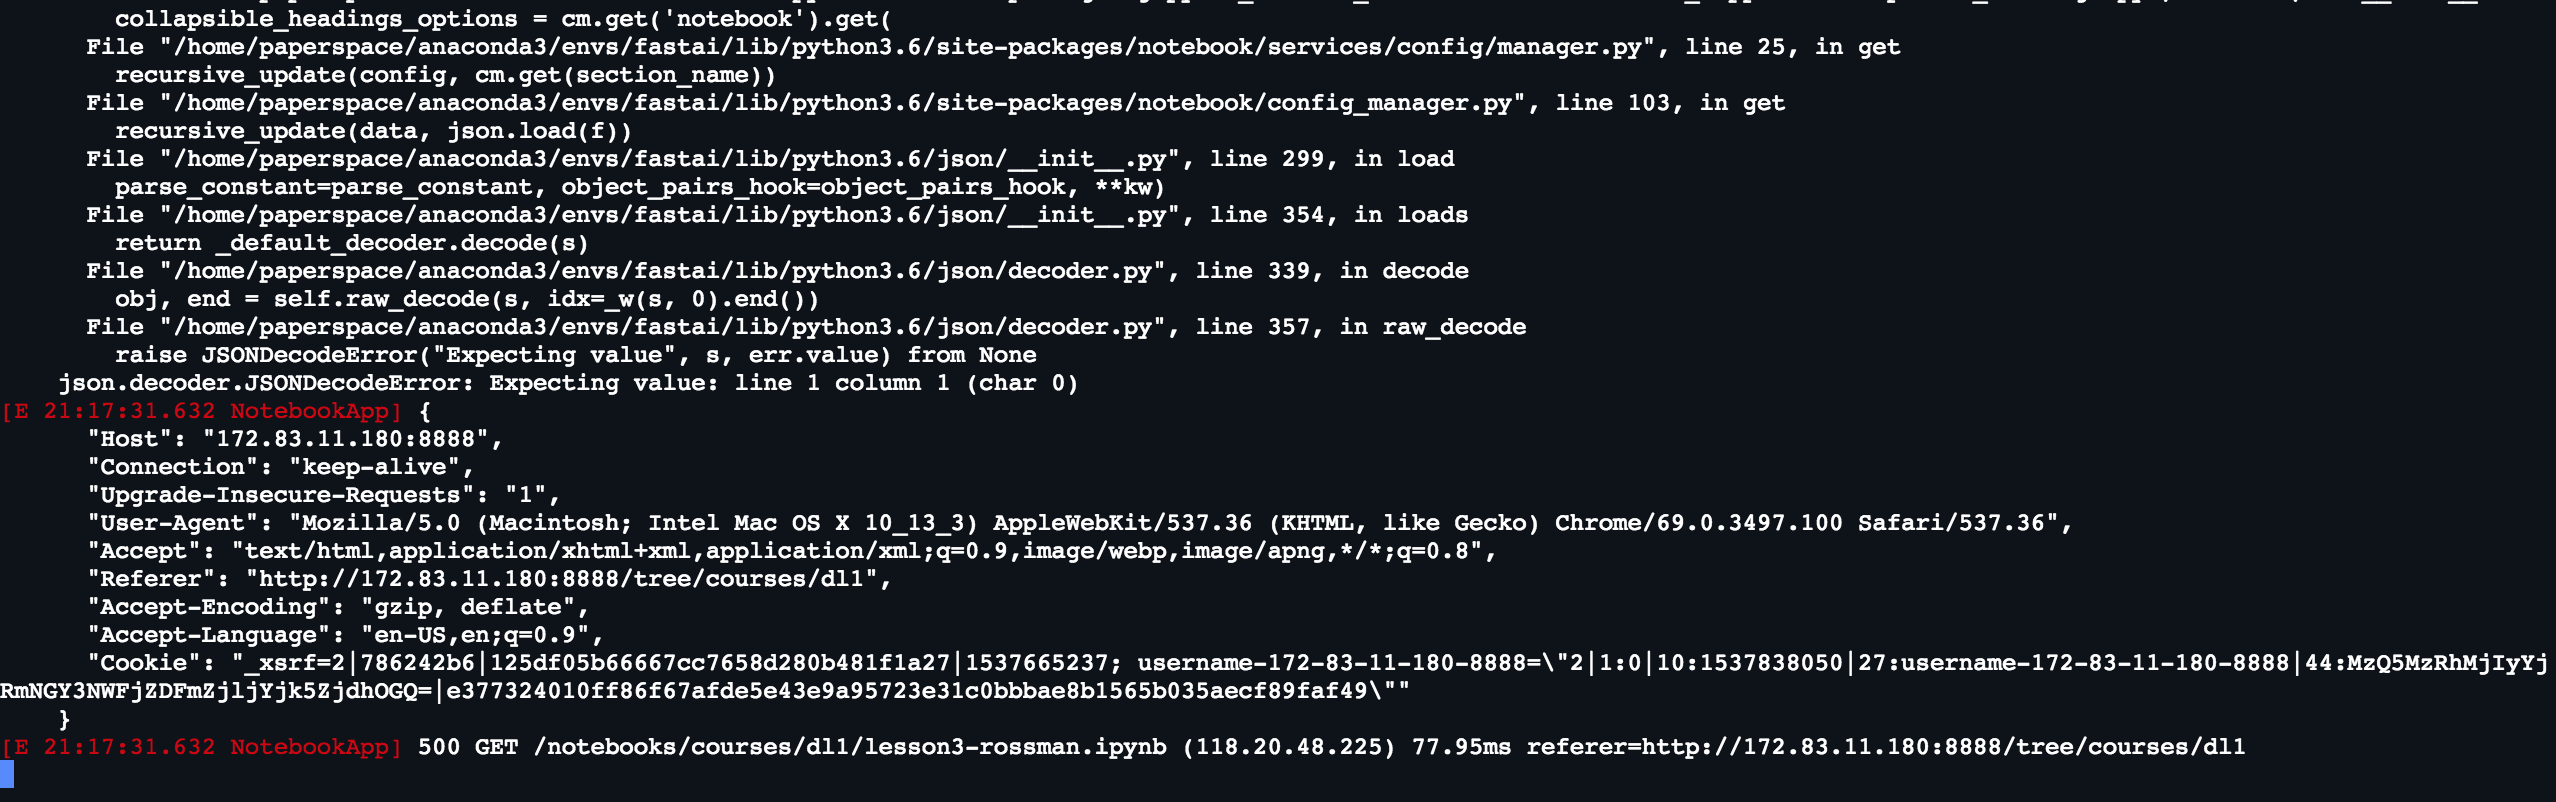 Json decoder jsondecodeerror. Expecting value: line 1 column 1 (Char 0) перевод. Image Decode failed файл hosts. Json file in Raw. Декодирование Raw файлов это.